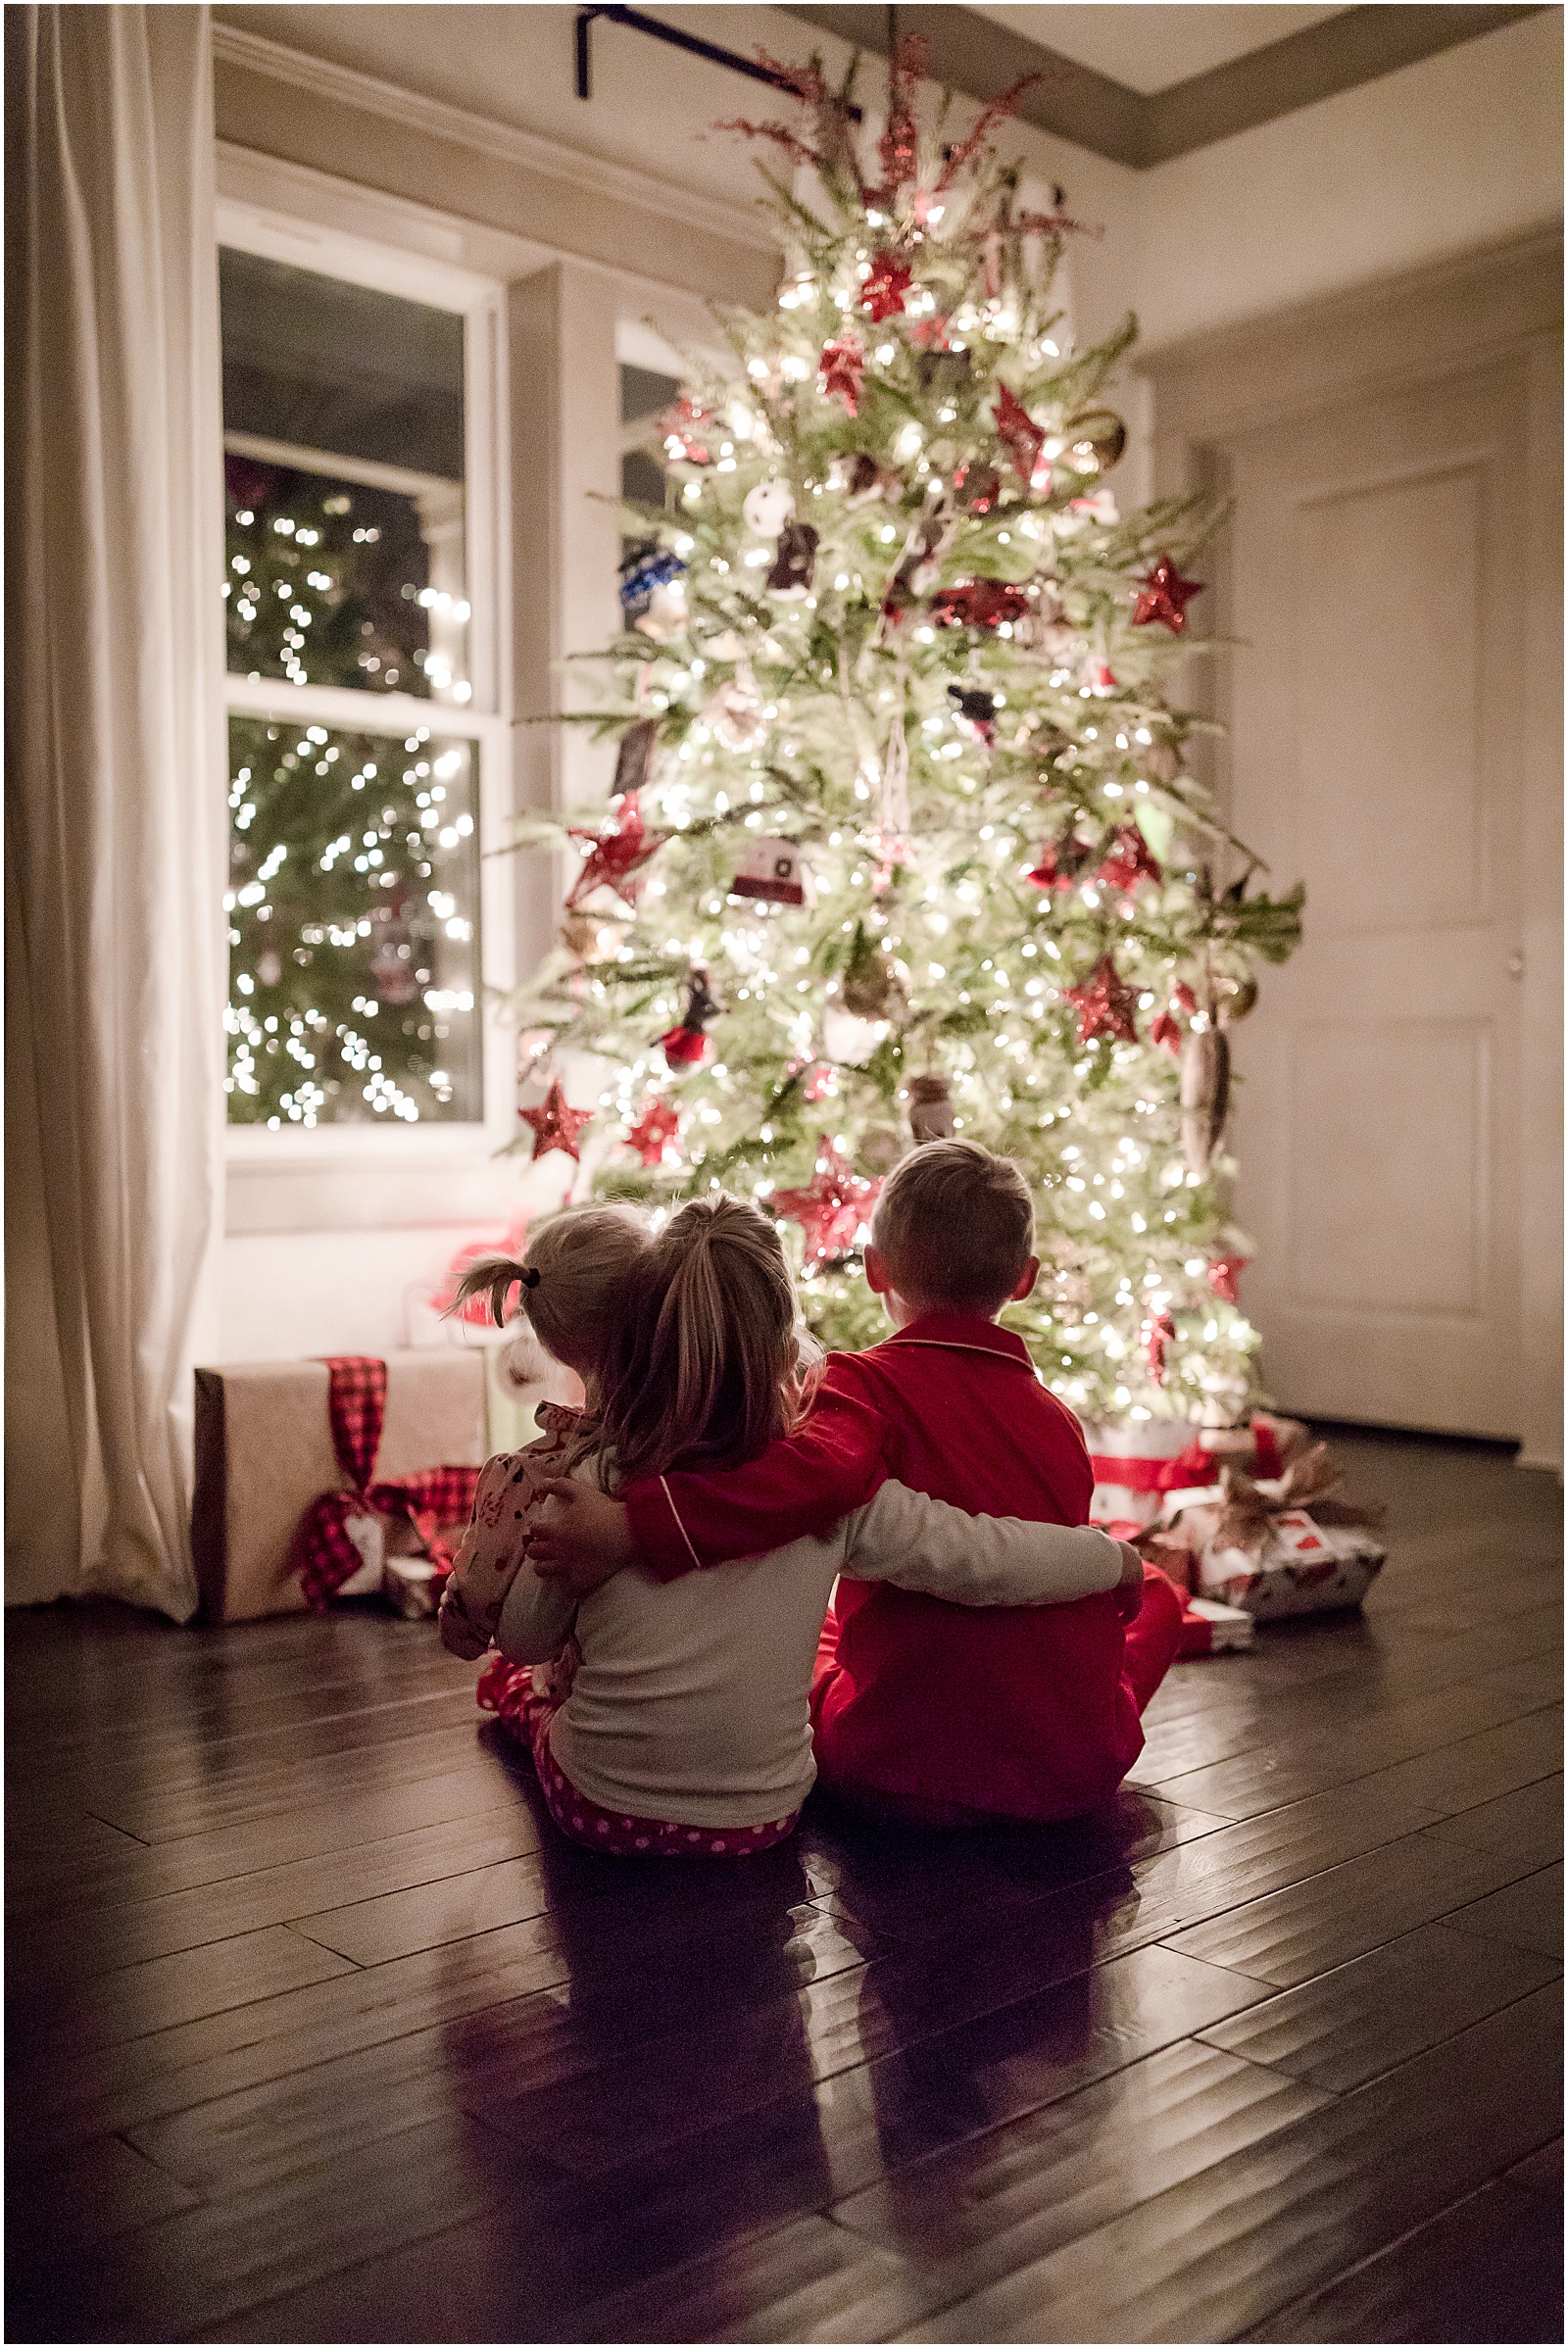 photos by the Christmas tree, children around the christmas tree